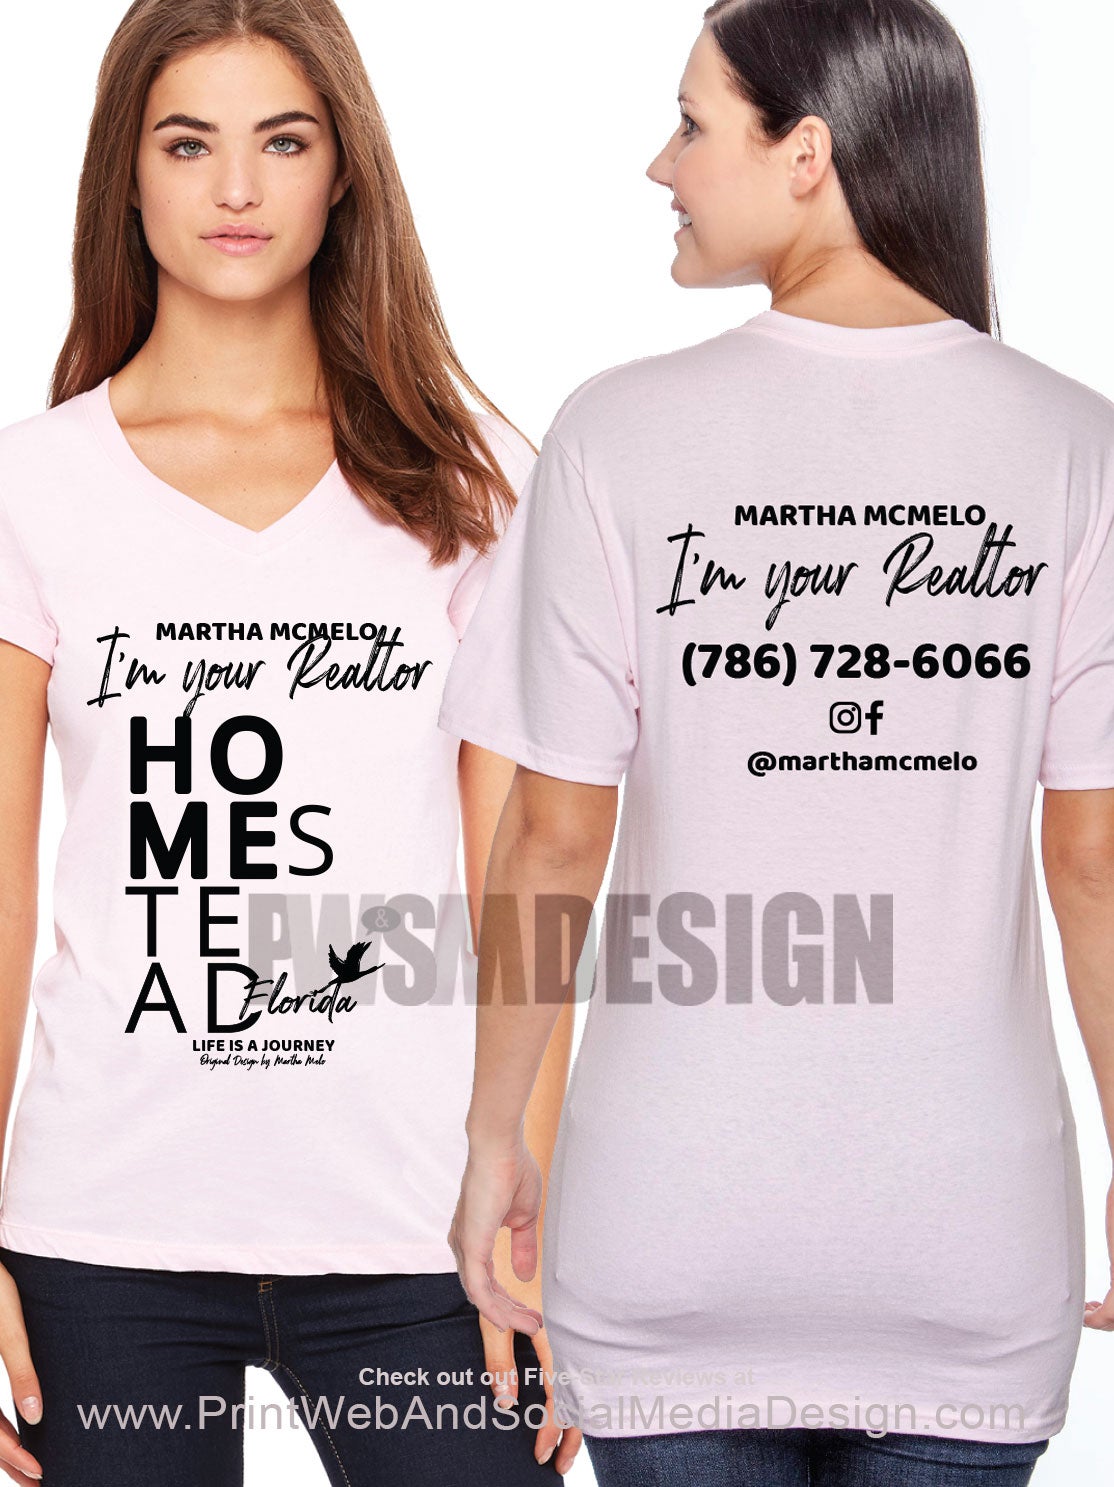 Realtor T-shirt and Real Estate Agent T-shirt | Custom T-shirts For Real Estate Agents | Personalized T-shirts For Real Estate Marketing | Print Web And Social Media Design By Martha